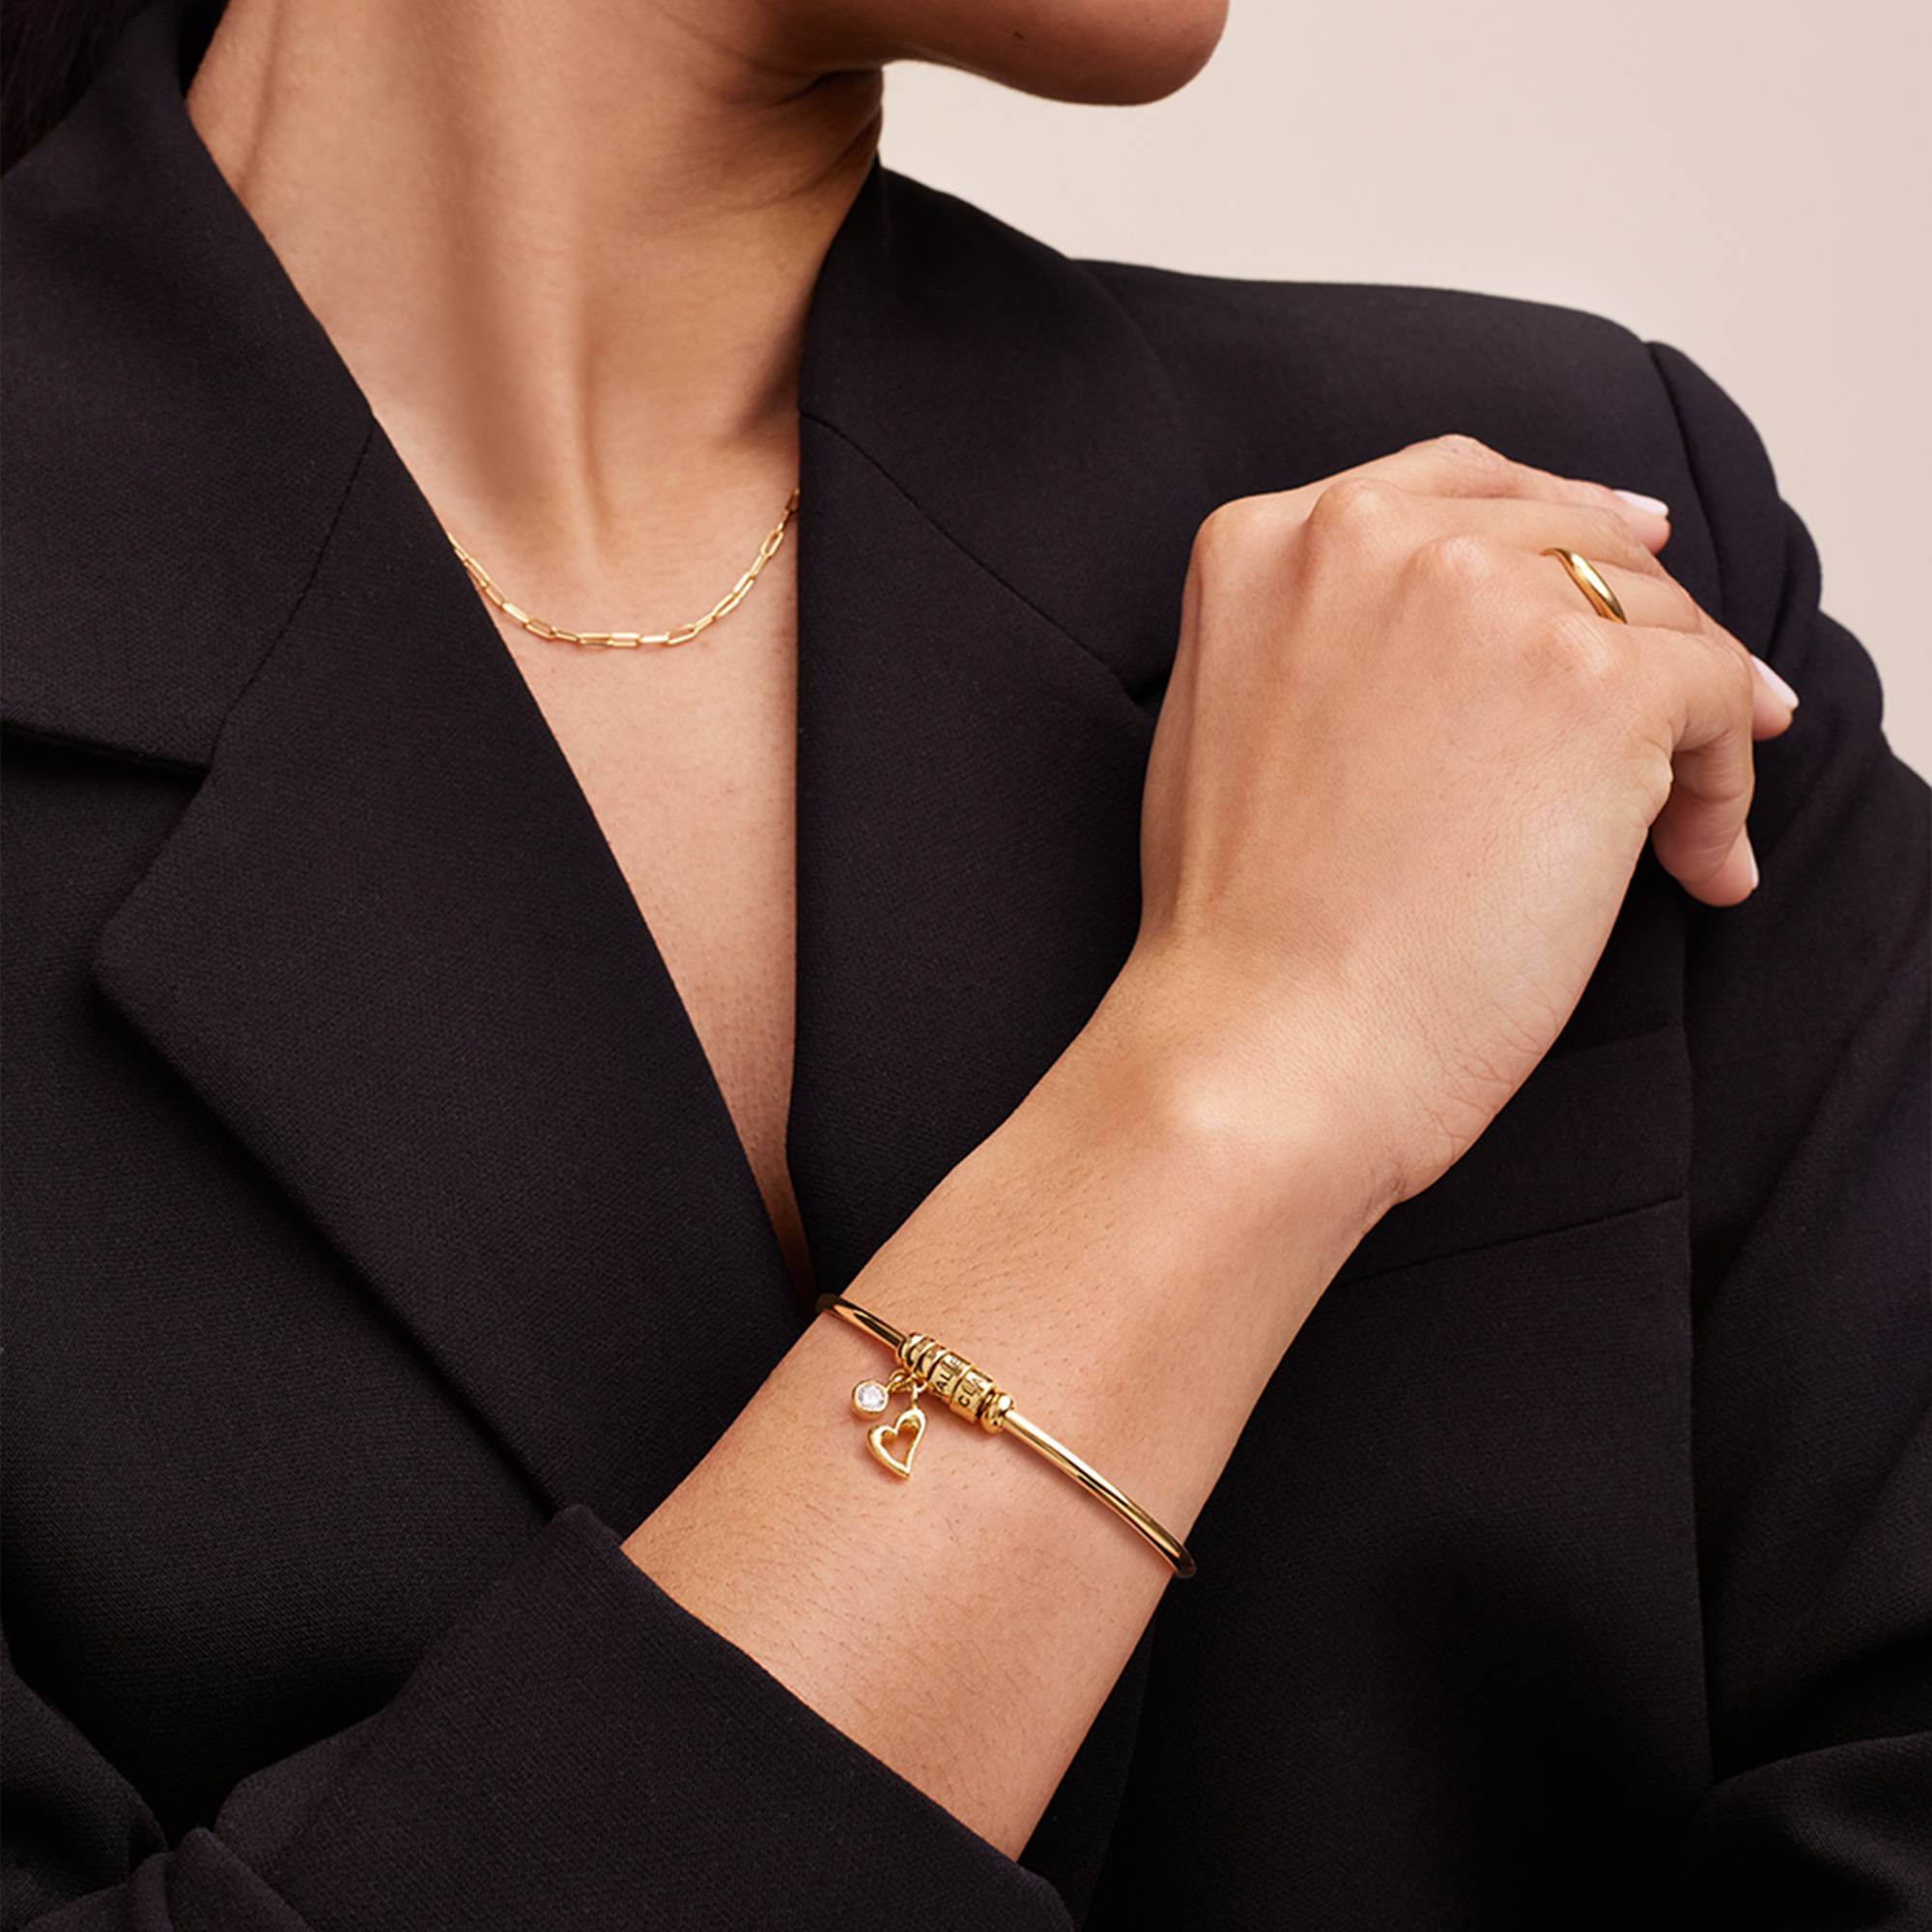 Linda Bangle Bracelet in Gold Vermeil-3 product photo